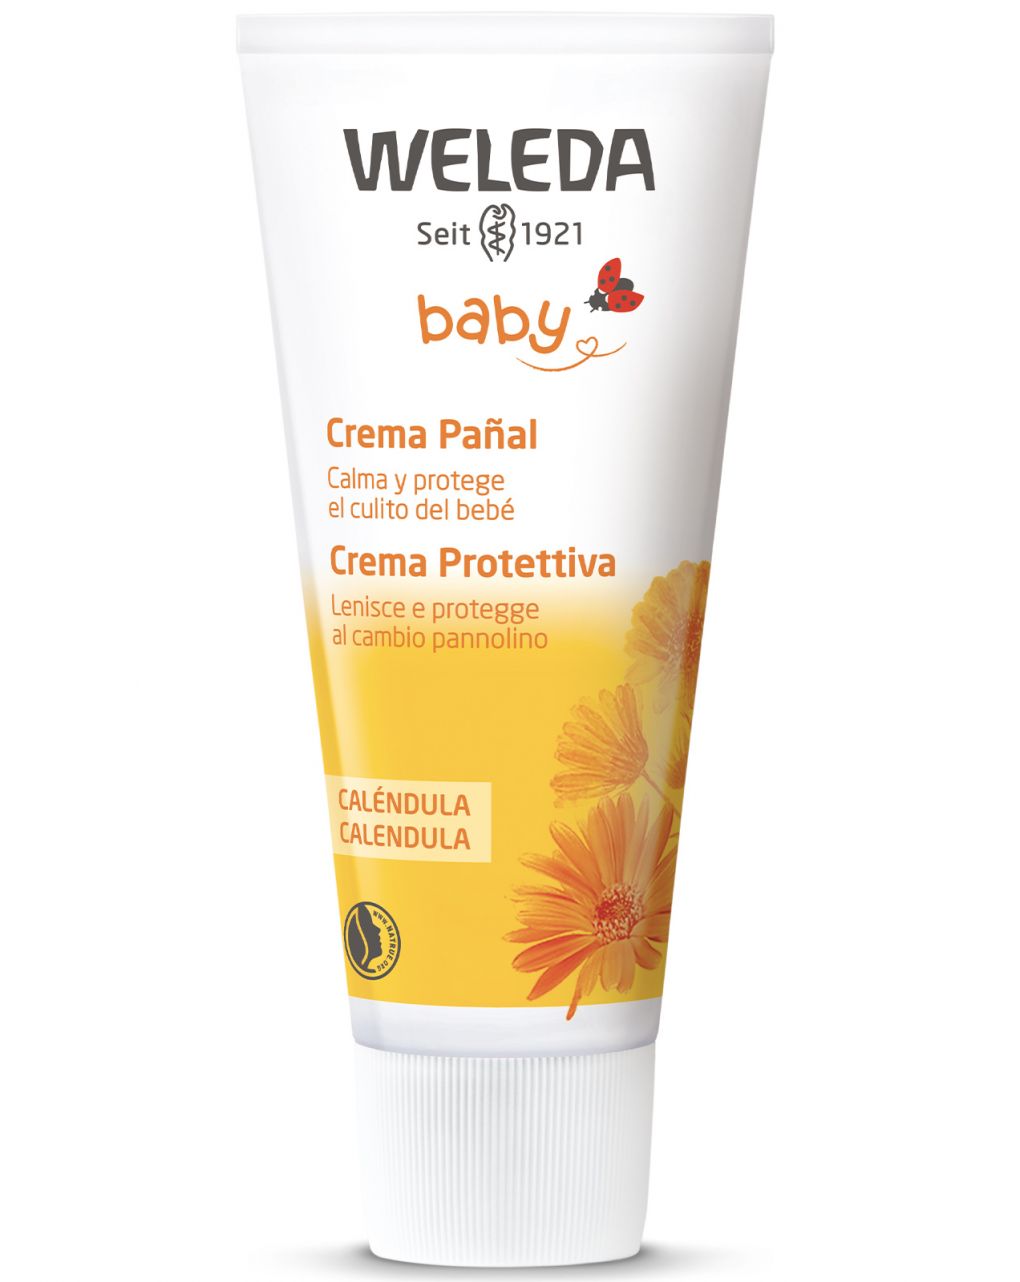 Weleda - baby crema protettiva calendula